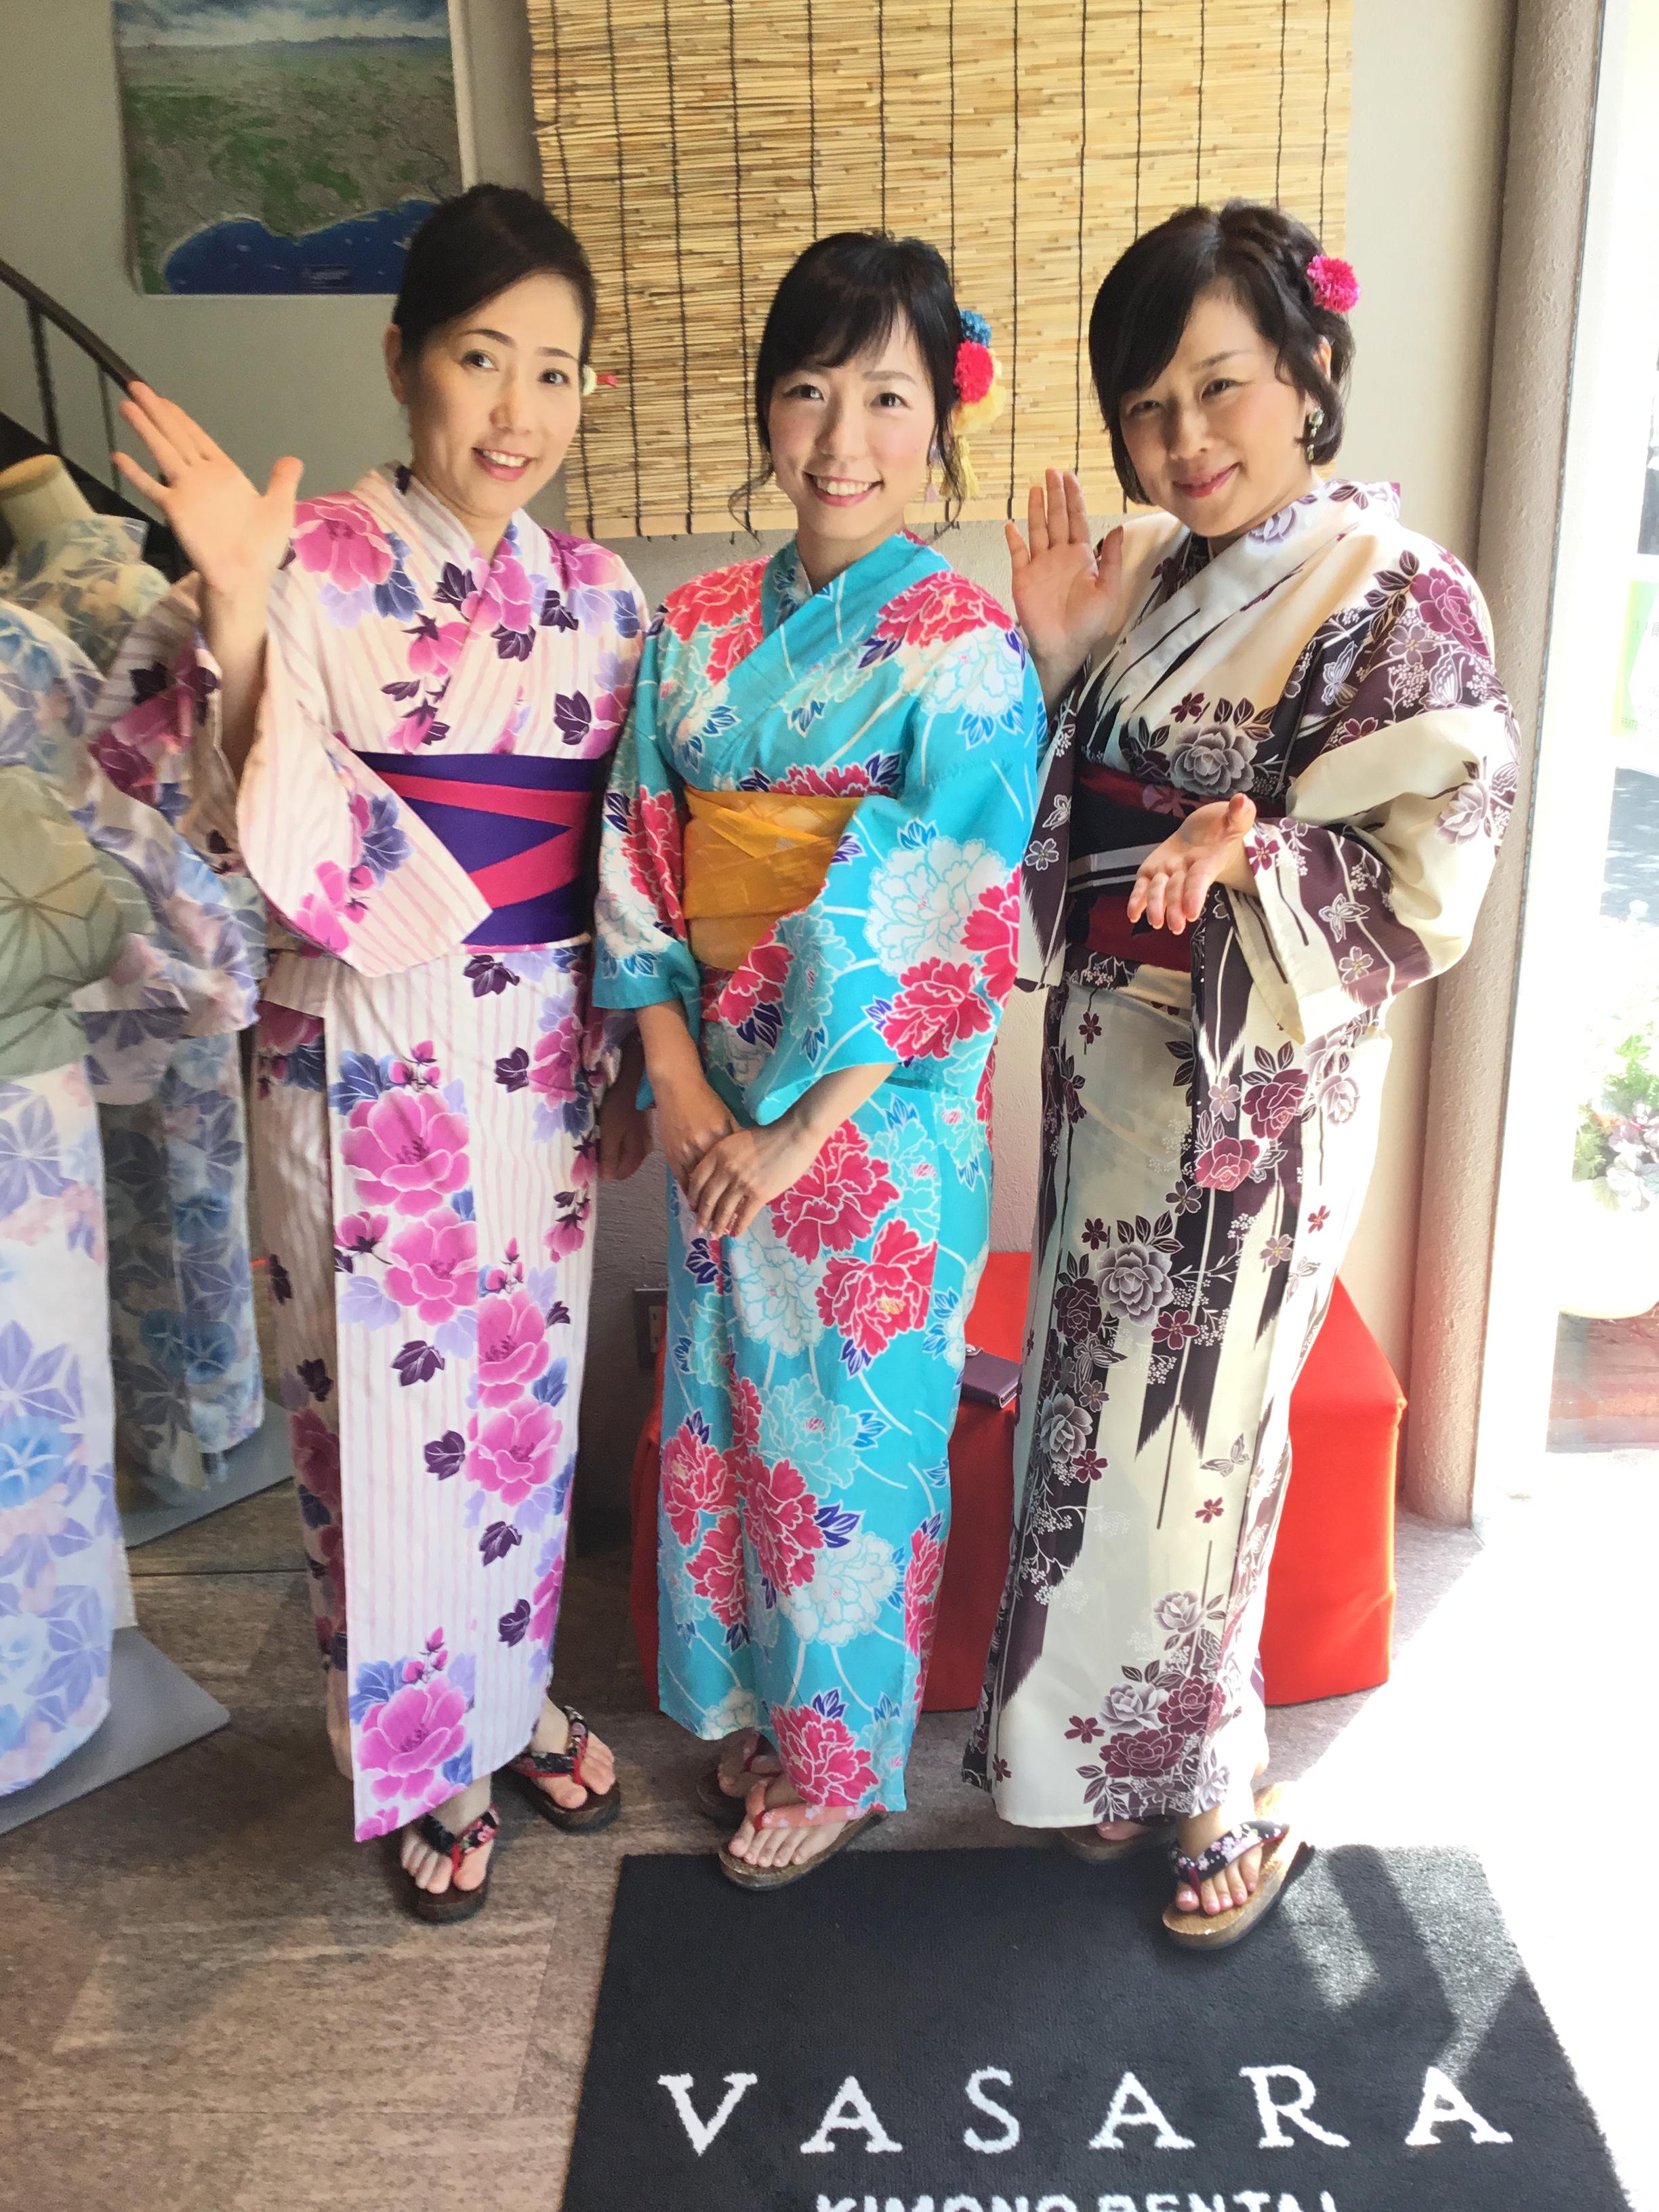 Shop Topics 浴衣女子会 鎌倉で着物 浴衣を楽しむなら 着物レンタルvasara